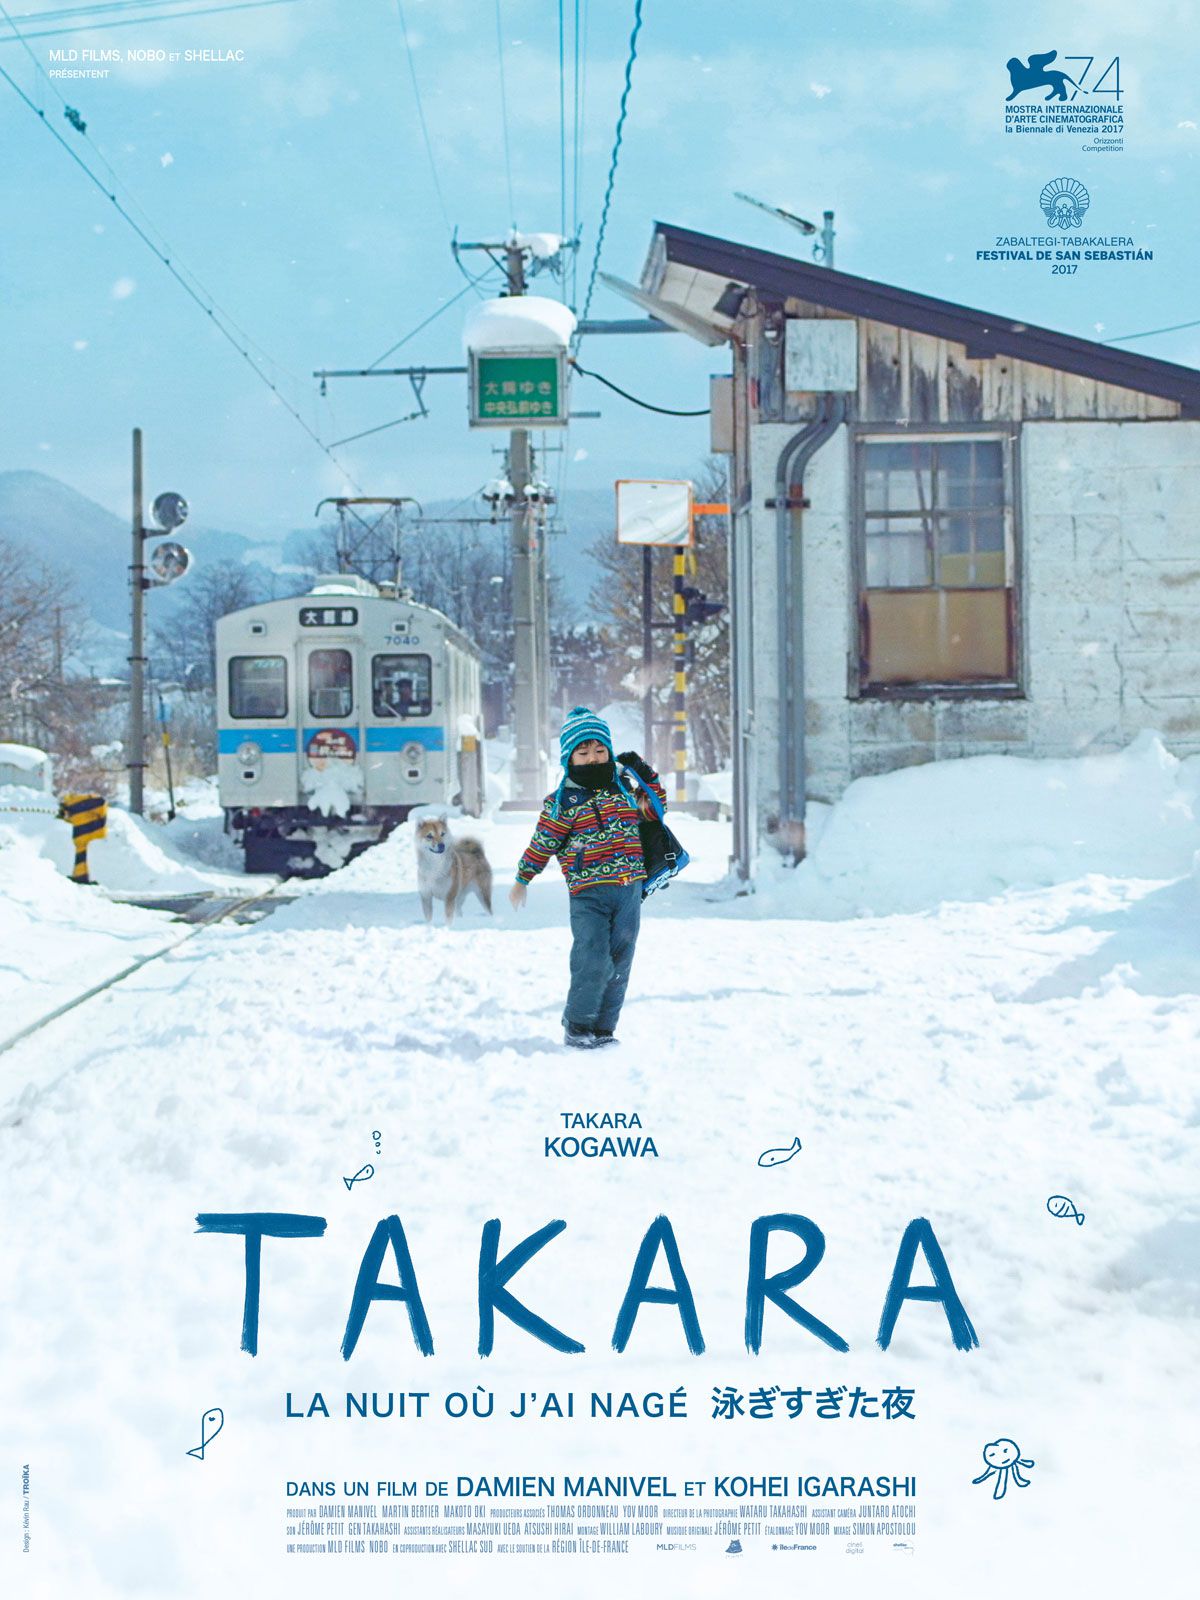 Takara, la nuit où j'ai nagé - Film (2018) streaming VF gratuit complet